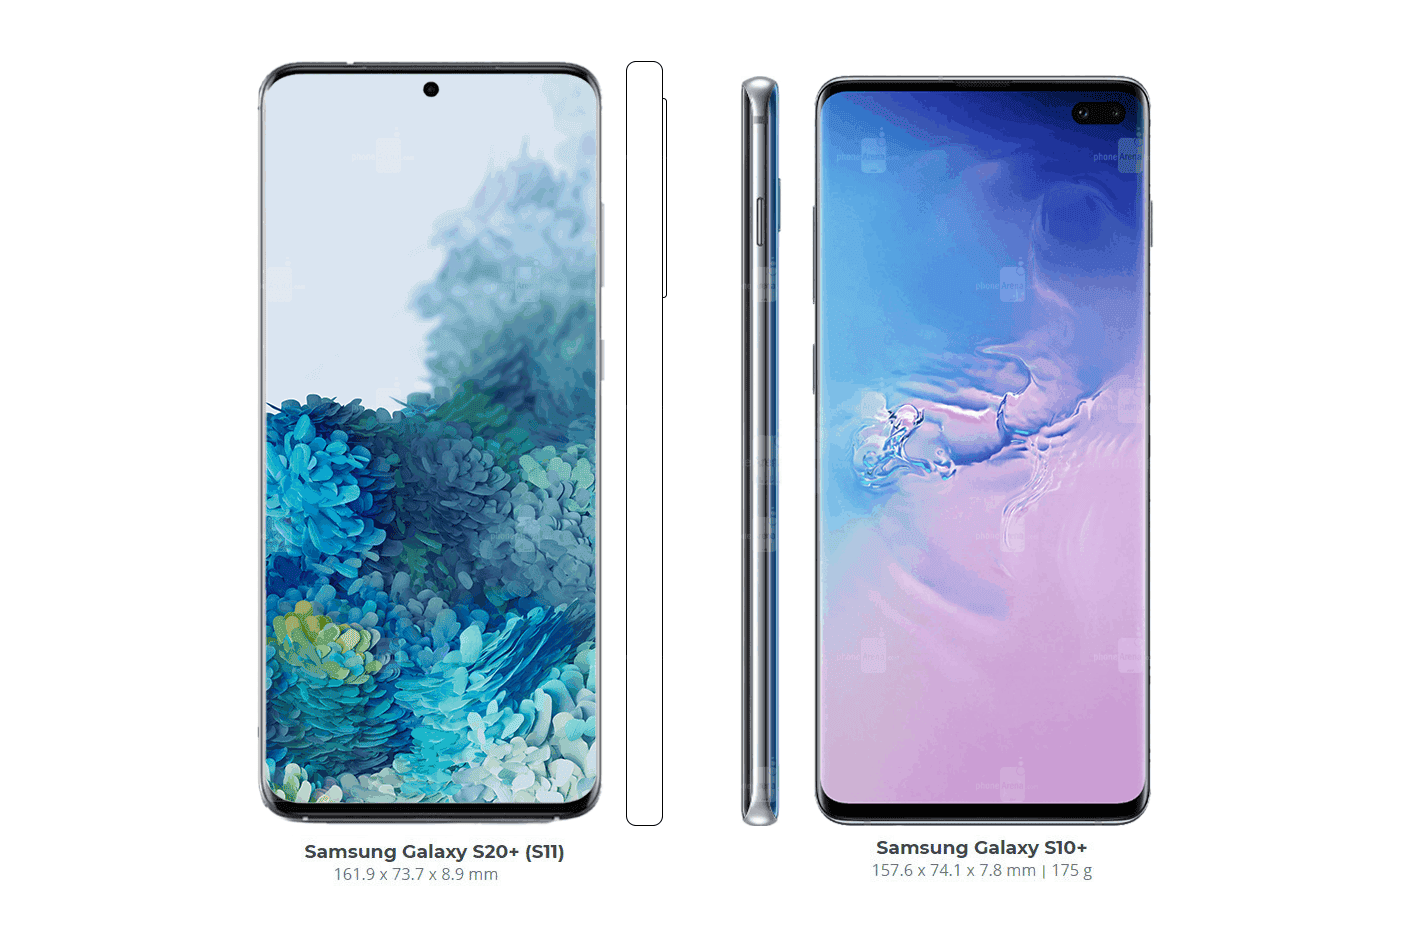 Samsung Galaxy S20 series vs Galaxy S10